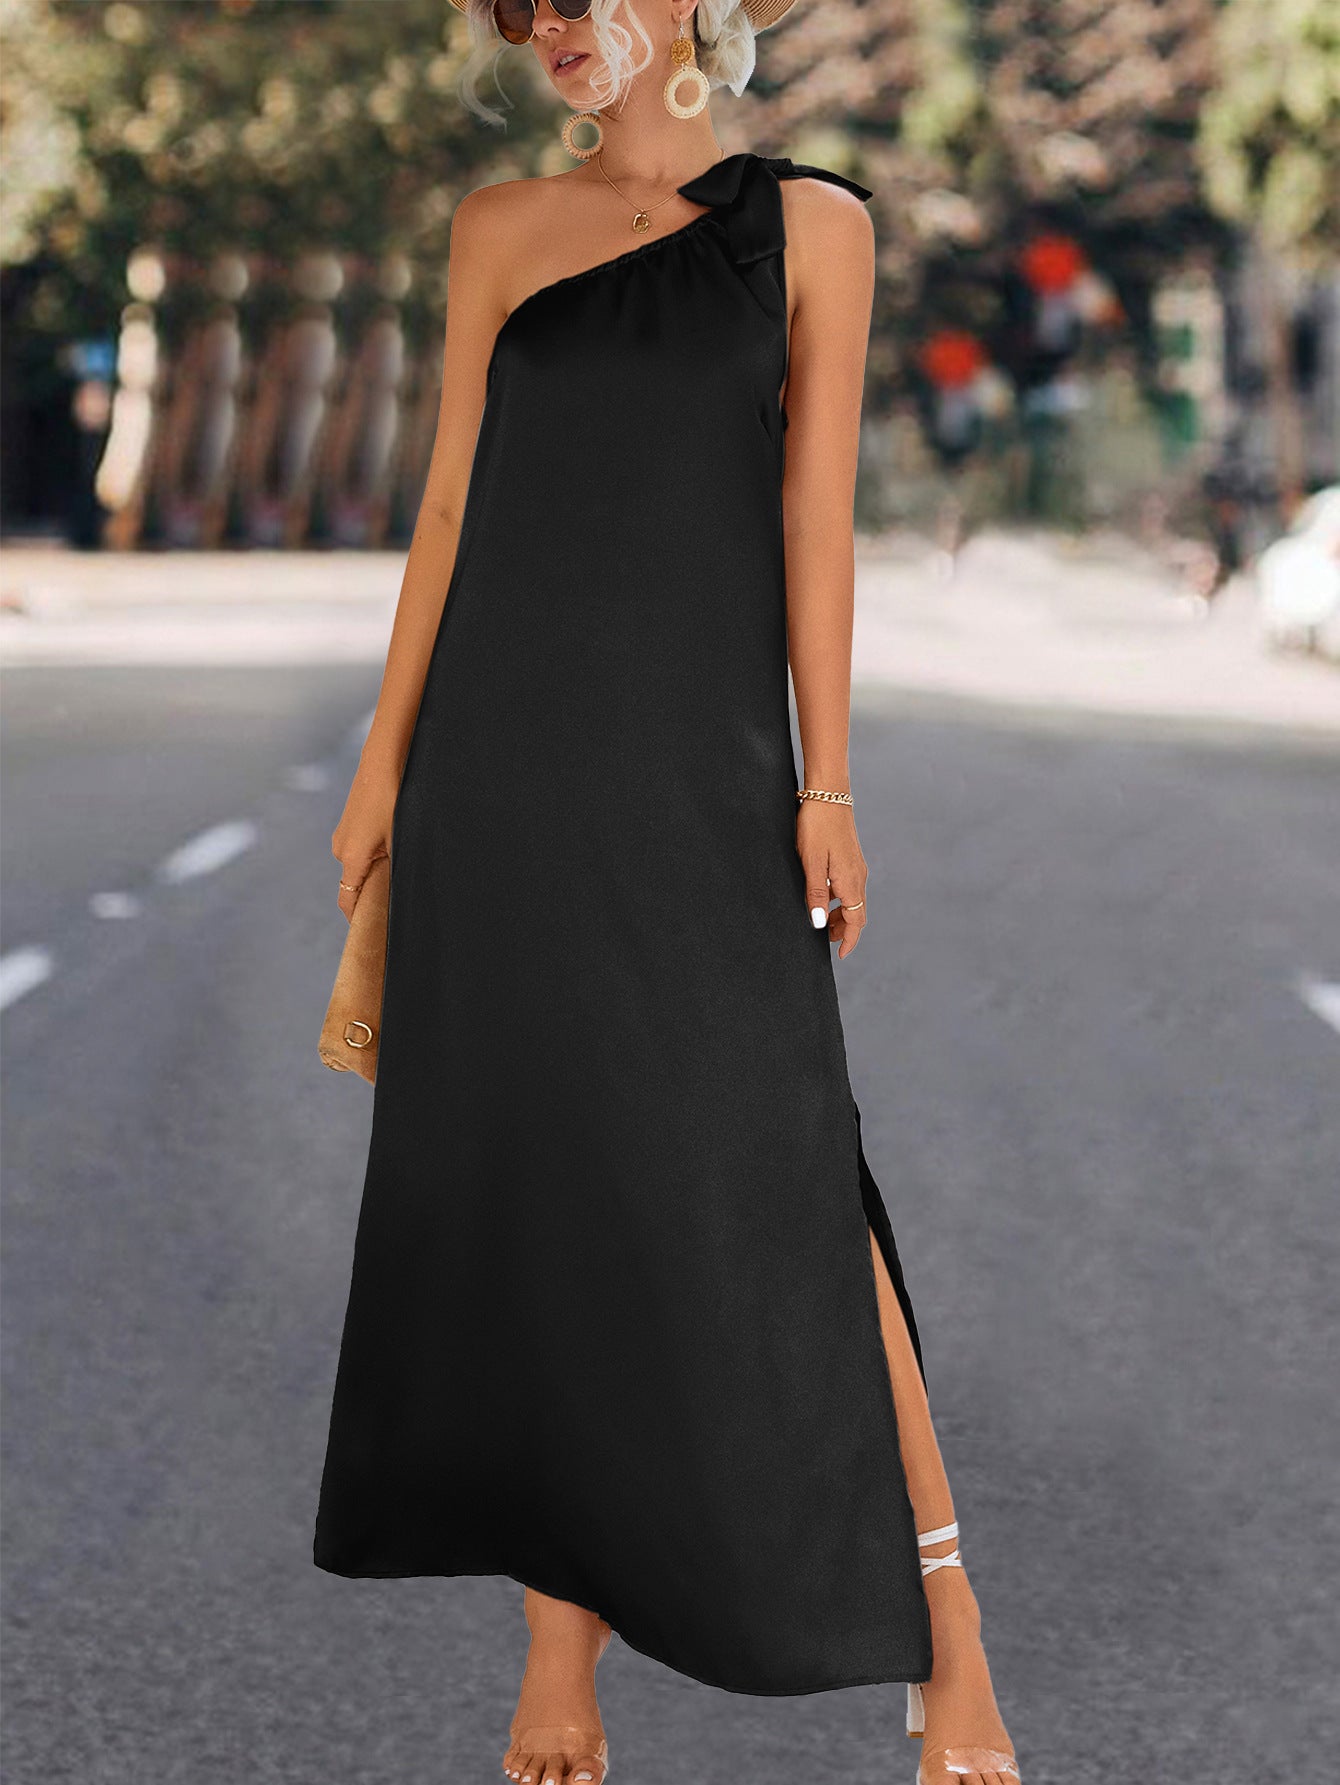 Casual One Shoulder Simple Design Long Dresses